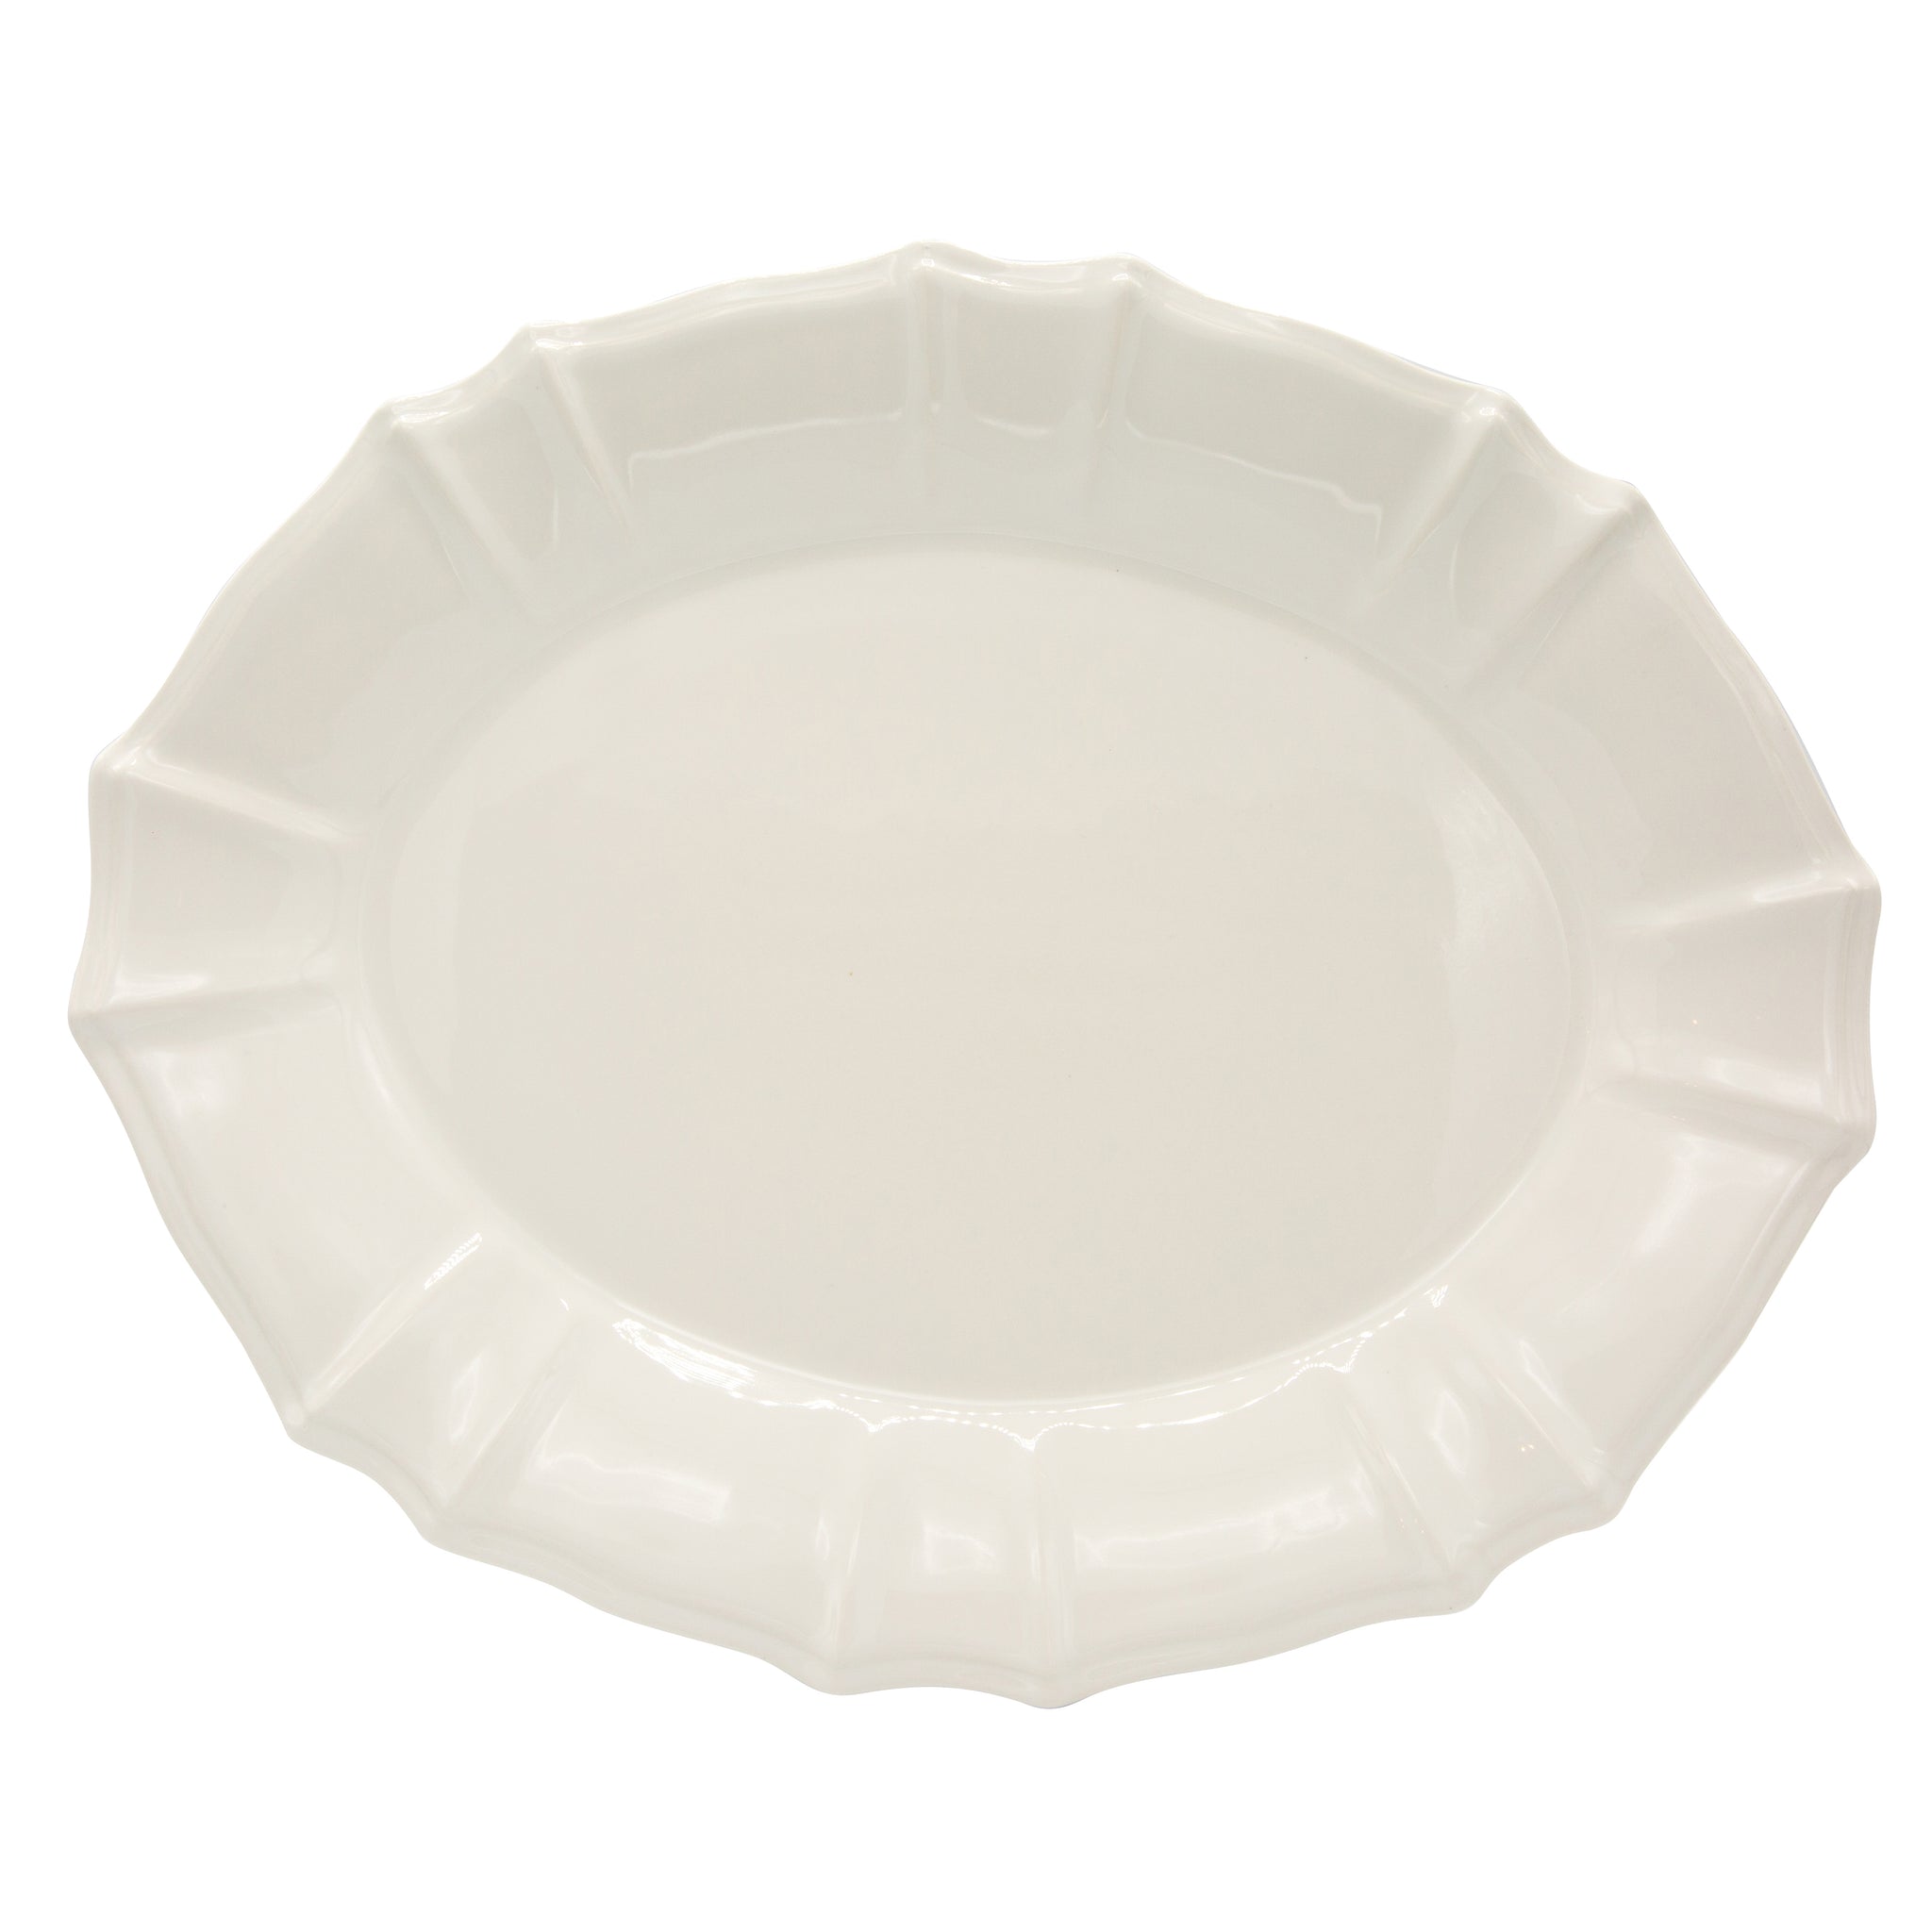 Siena 16 piece Dinnerware Set White